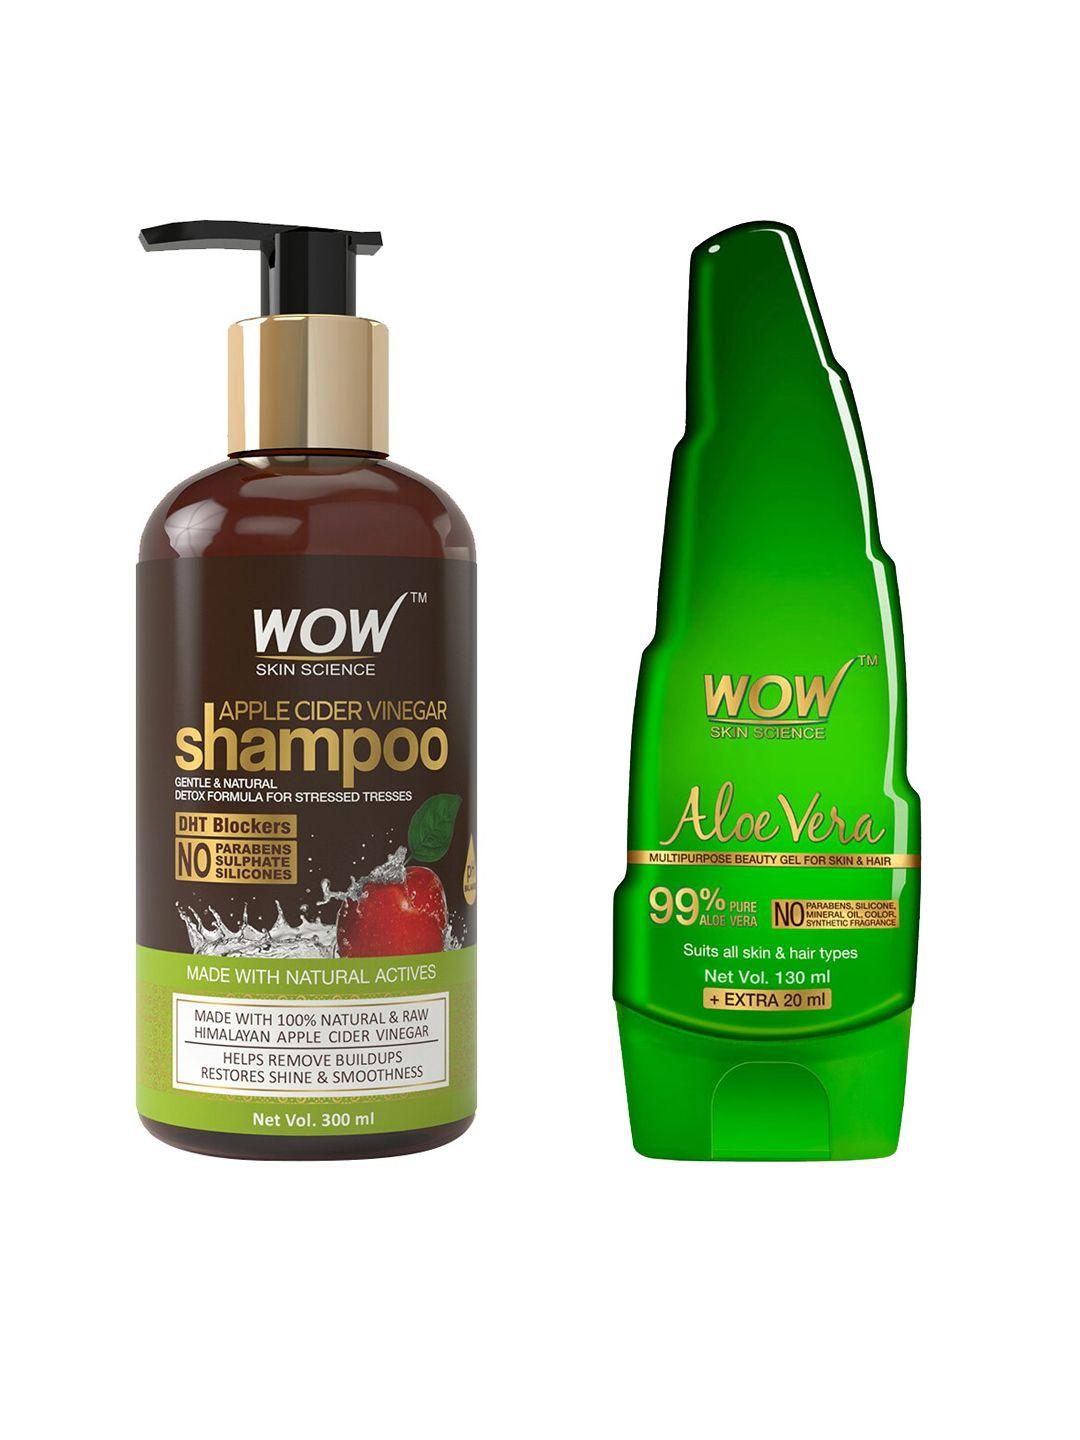 wow skin science unisex set of shampoo & aloe vera gel